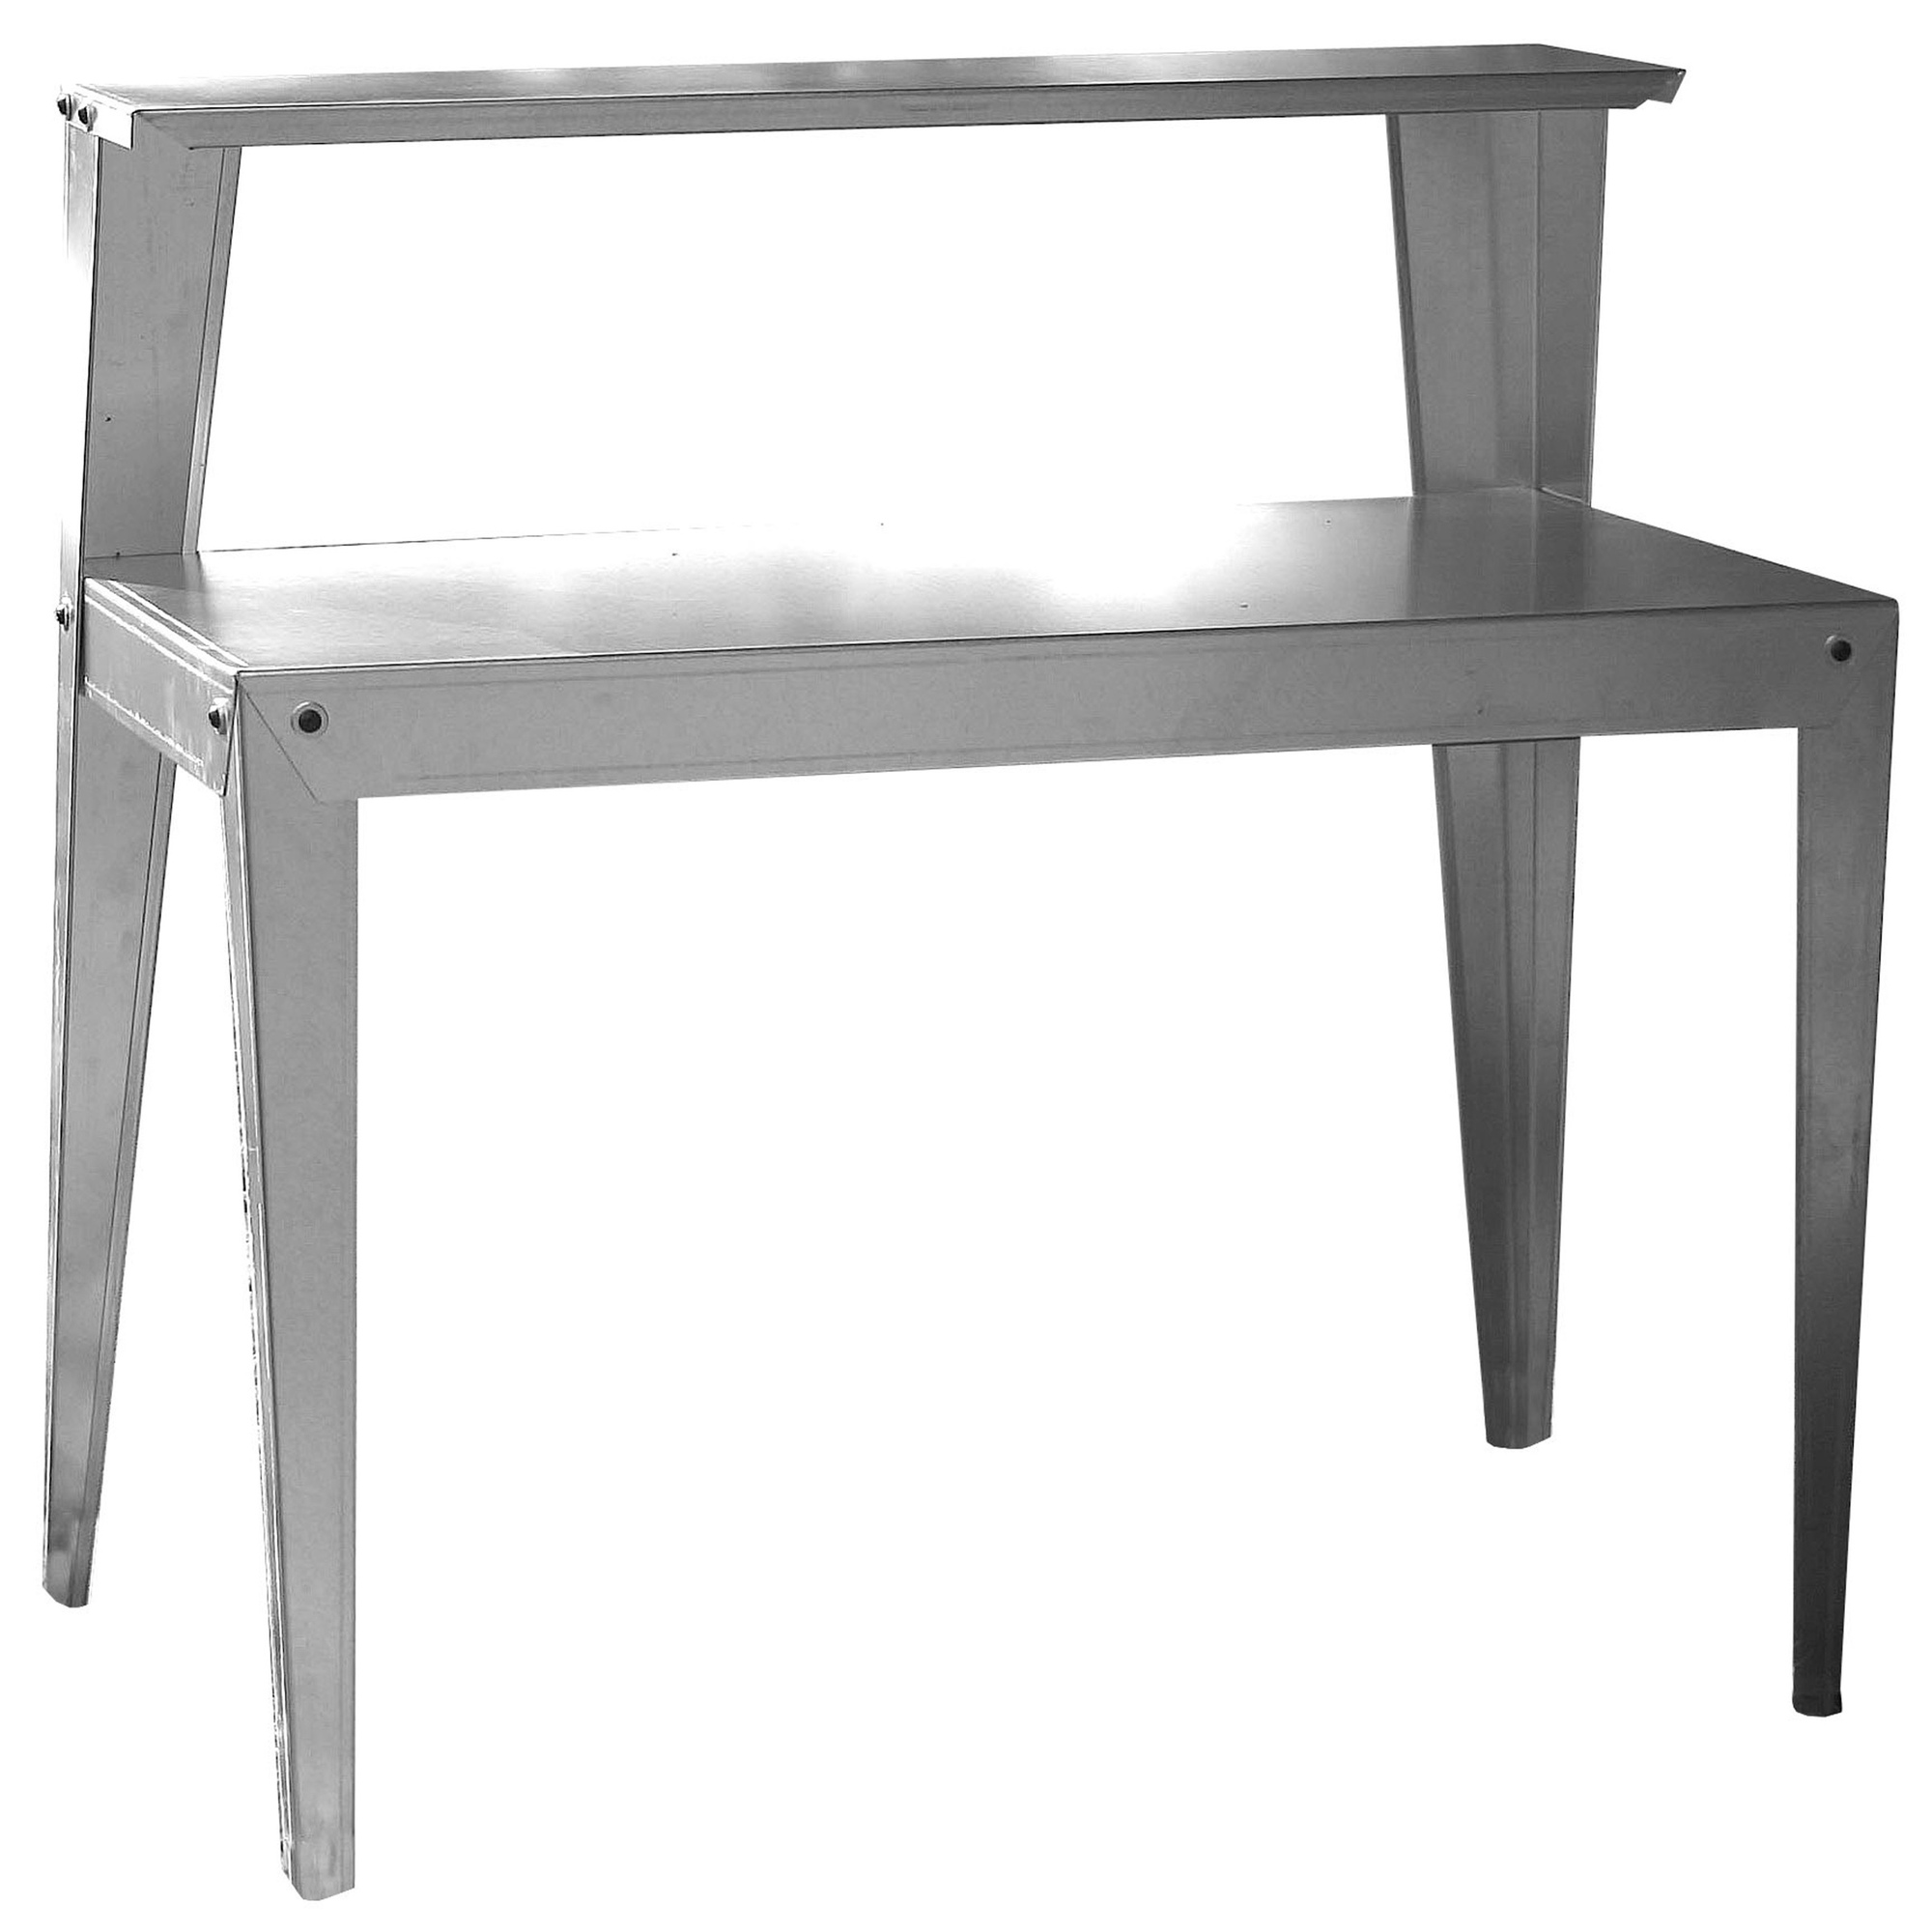 AMERIHOME, Multi-Use Steel Table/Work Bench, Model GPBENCH